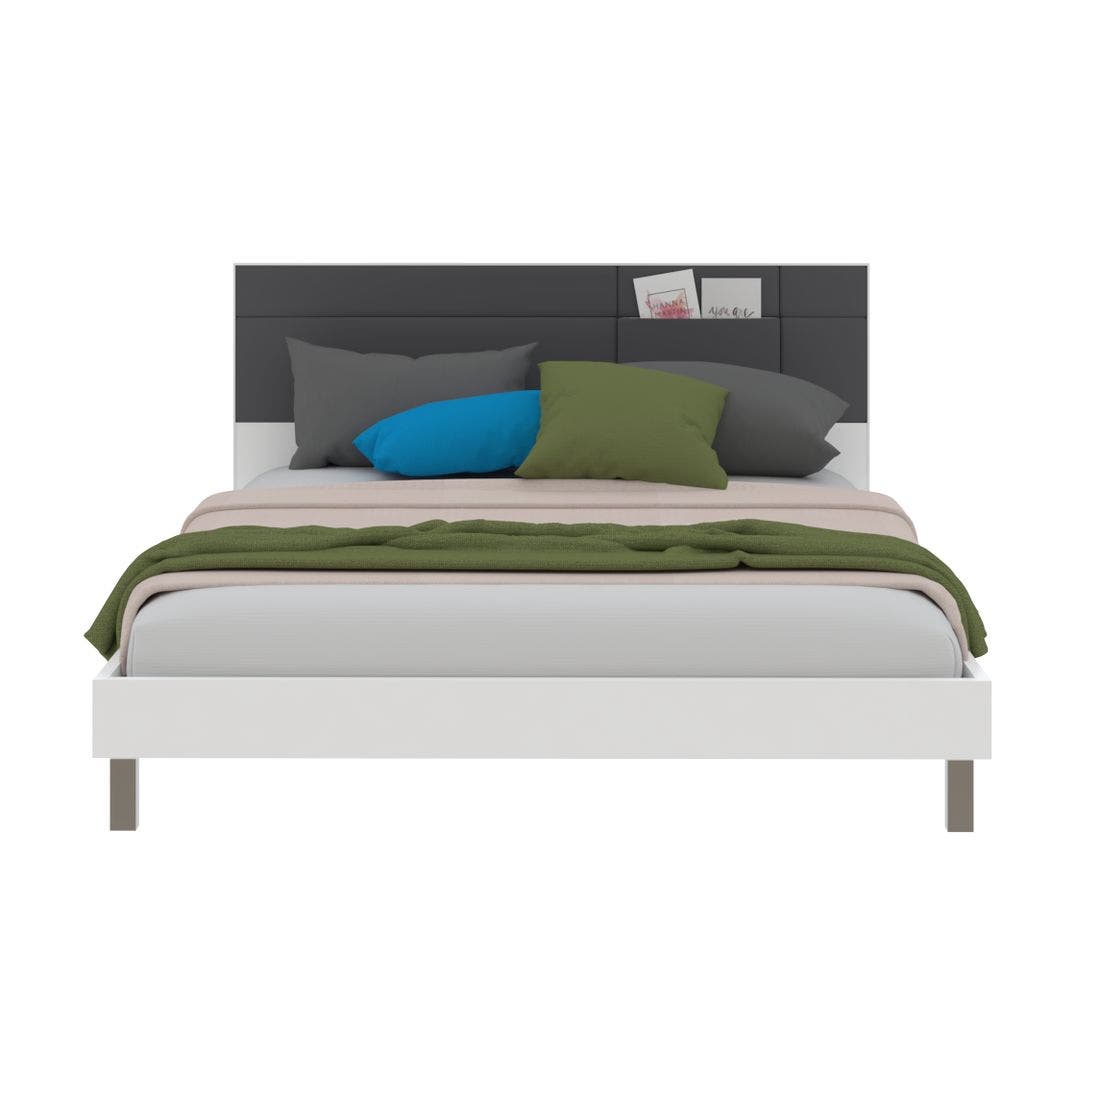 19168045-minimo-b-furniture-bedroom-furniture-beds-01